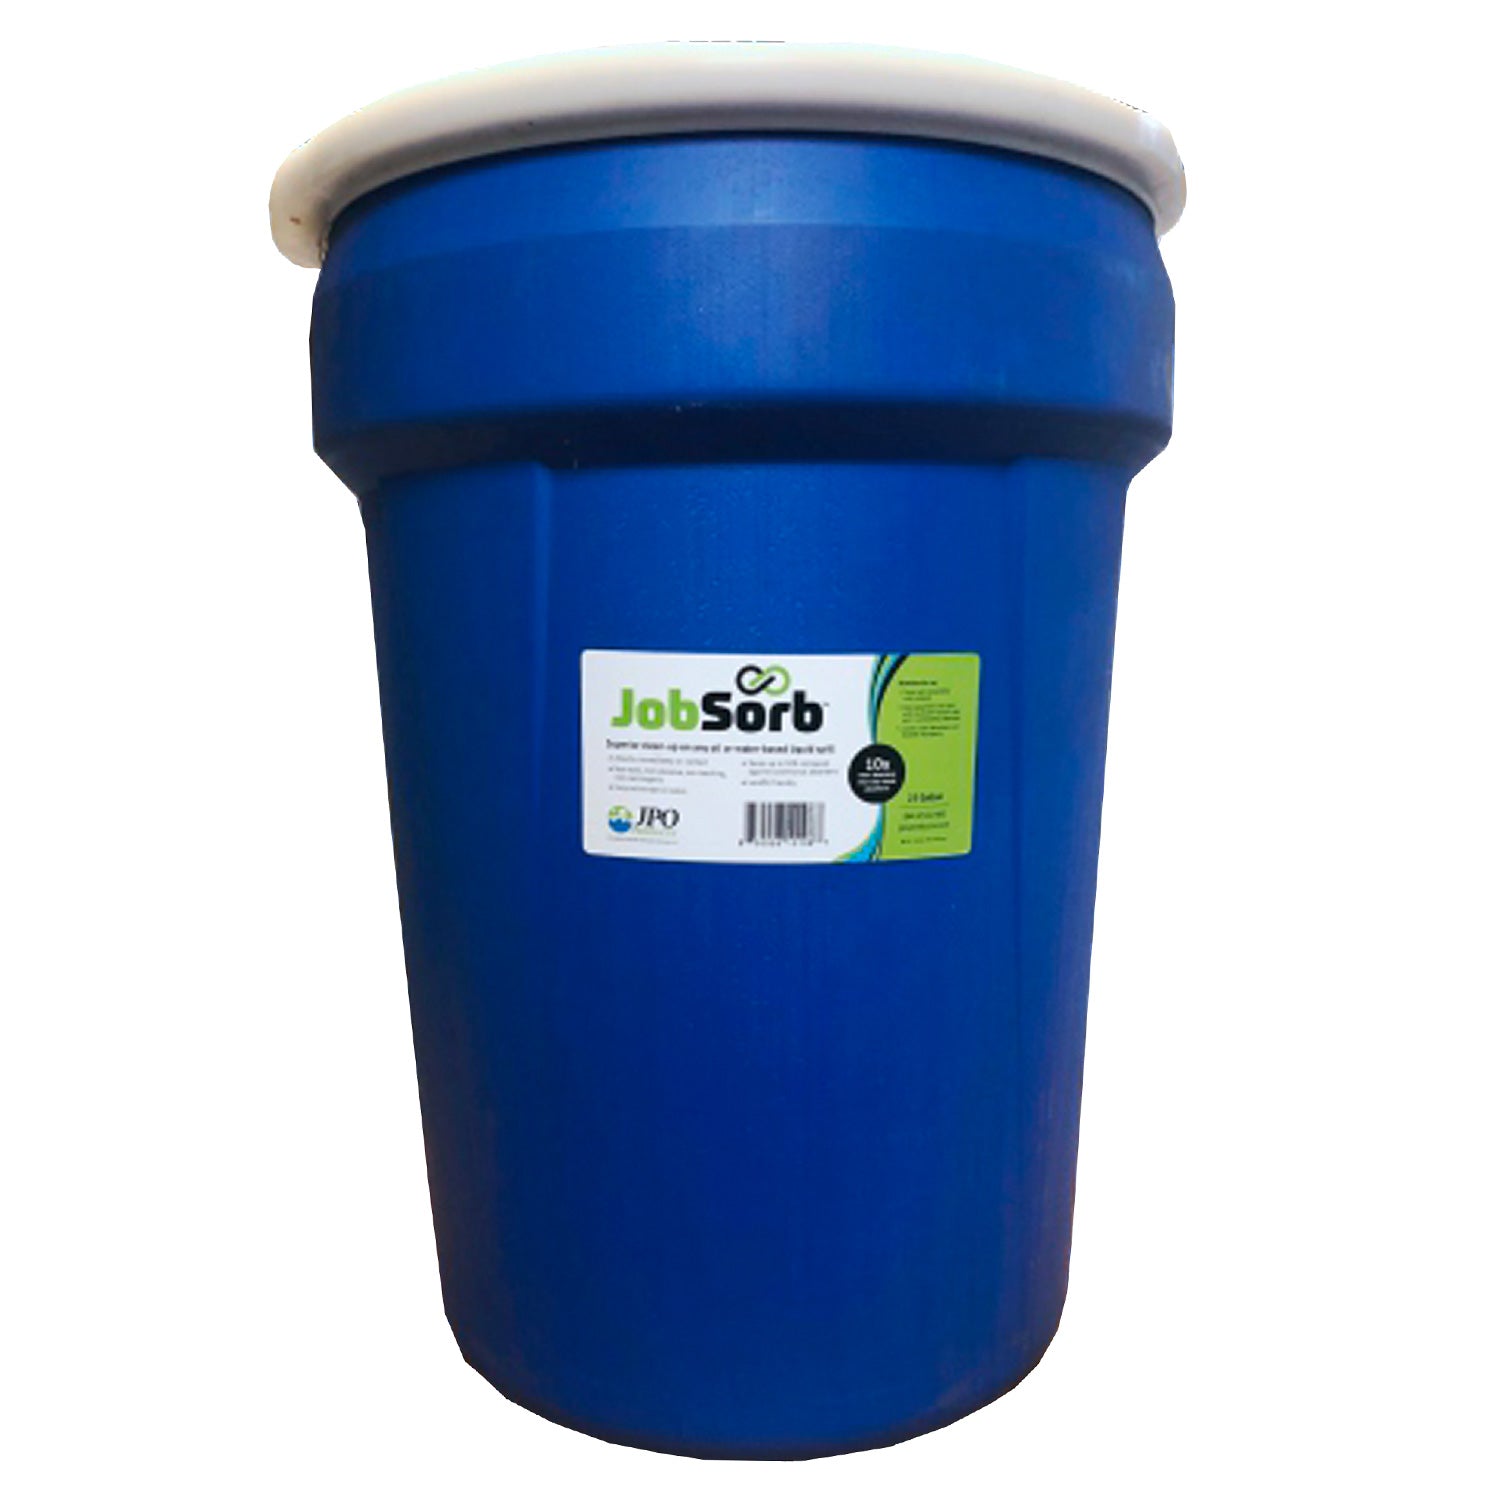 jobsorb-absorbent-material-25-gallon-drum